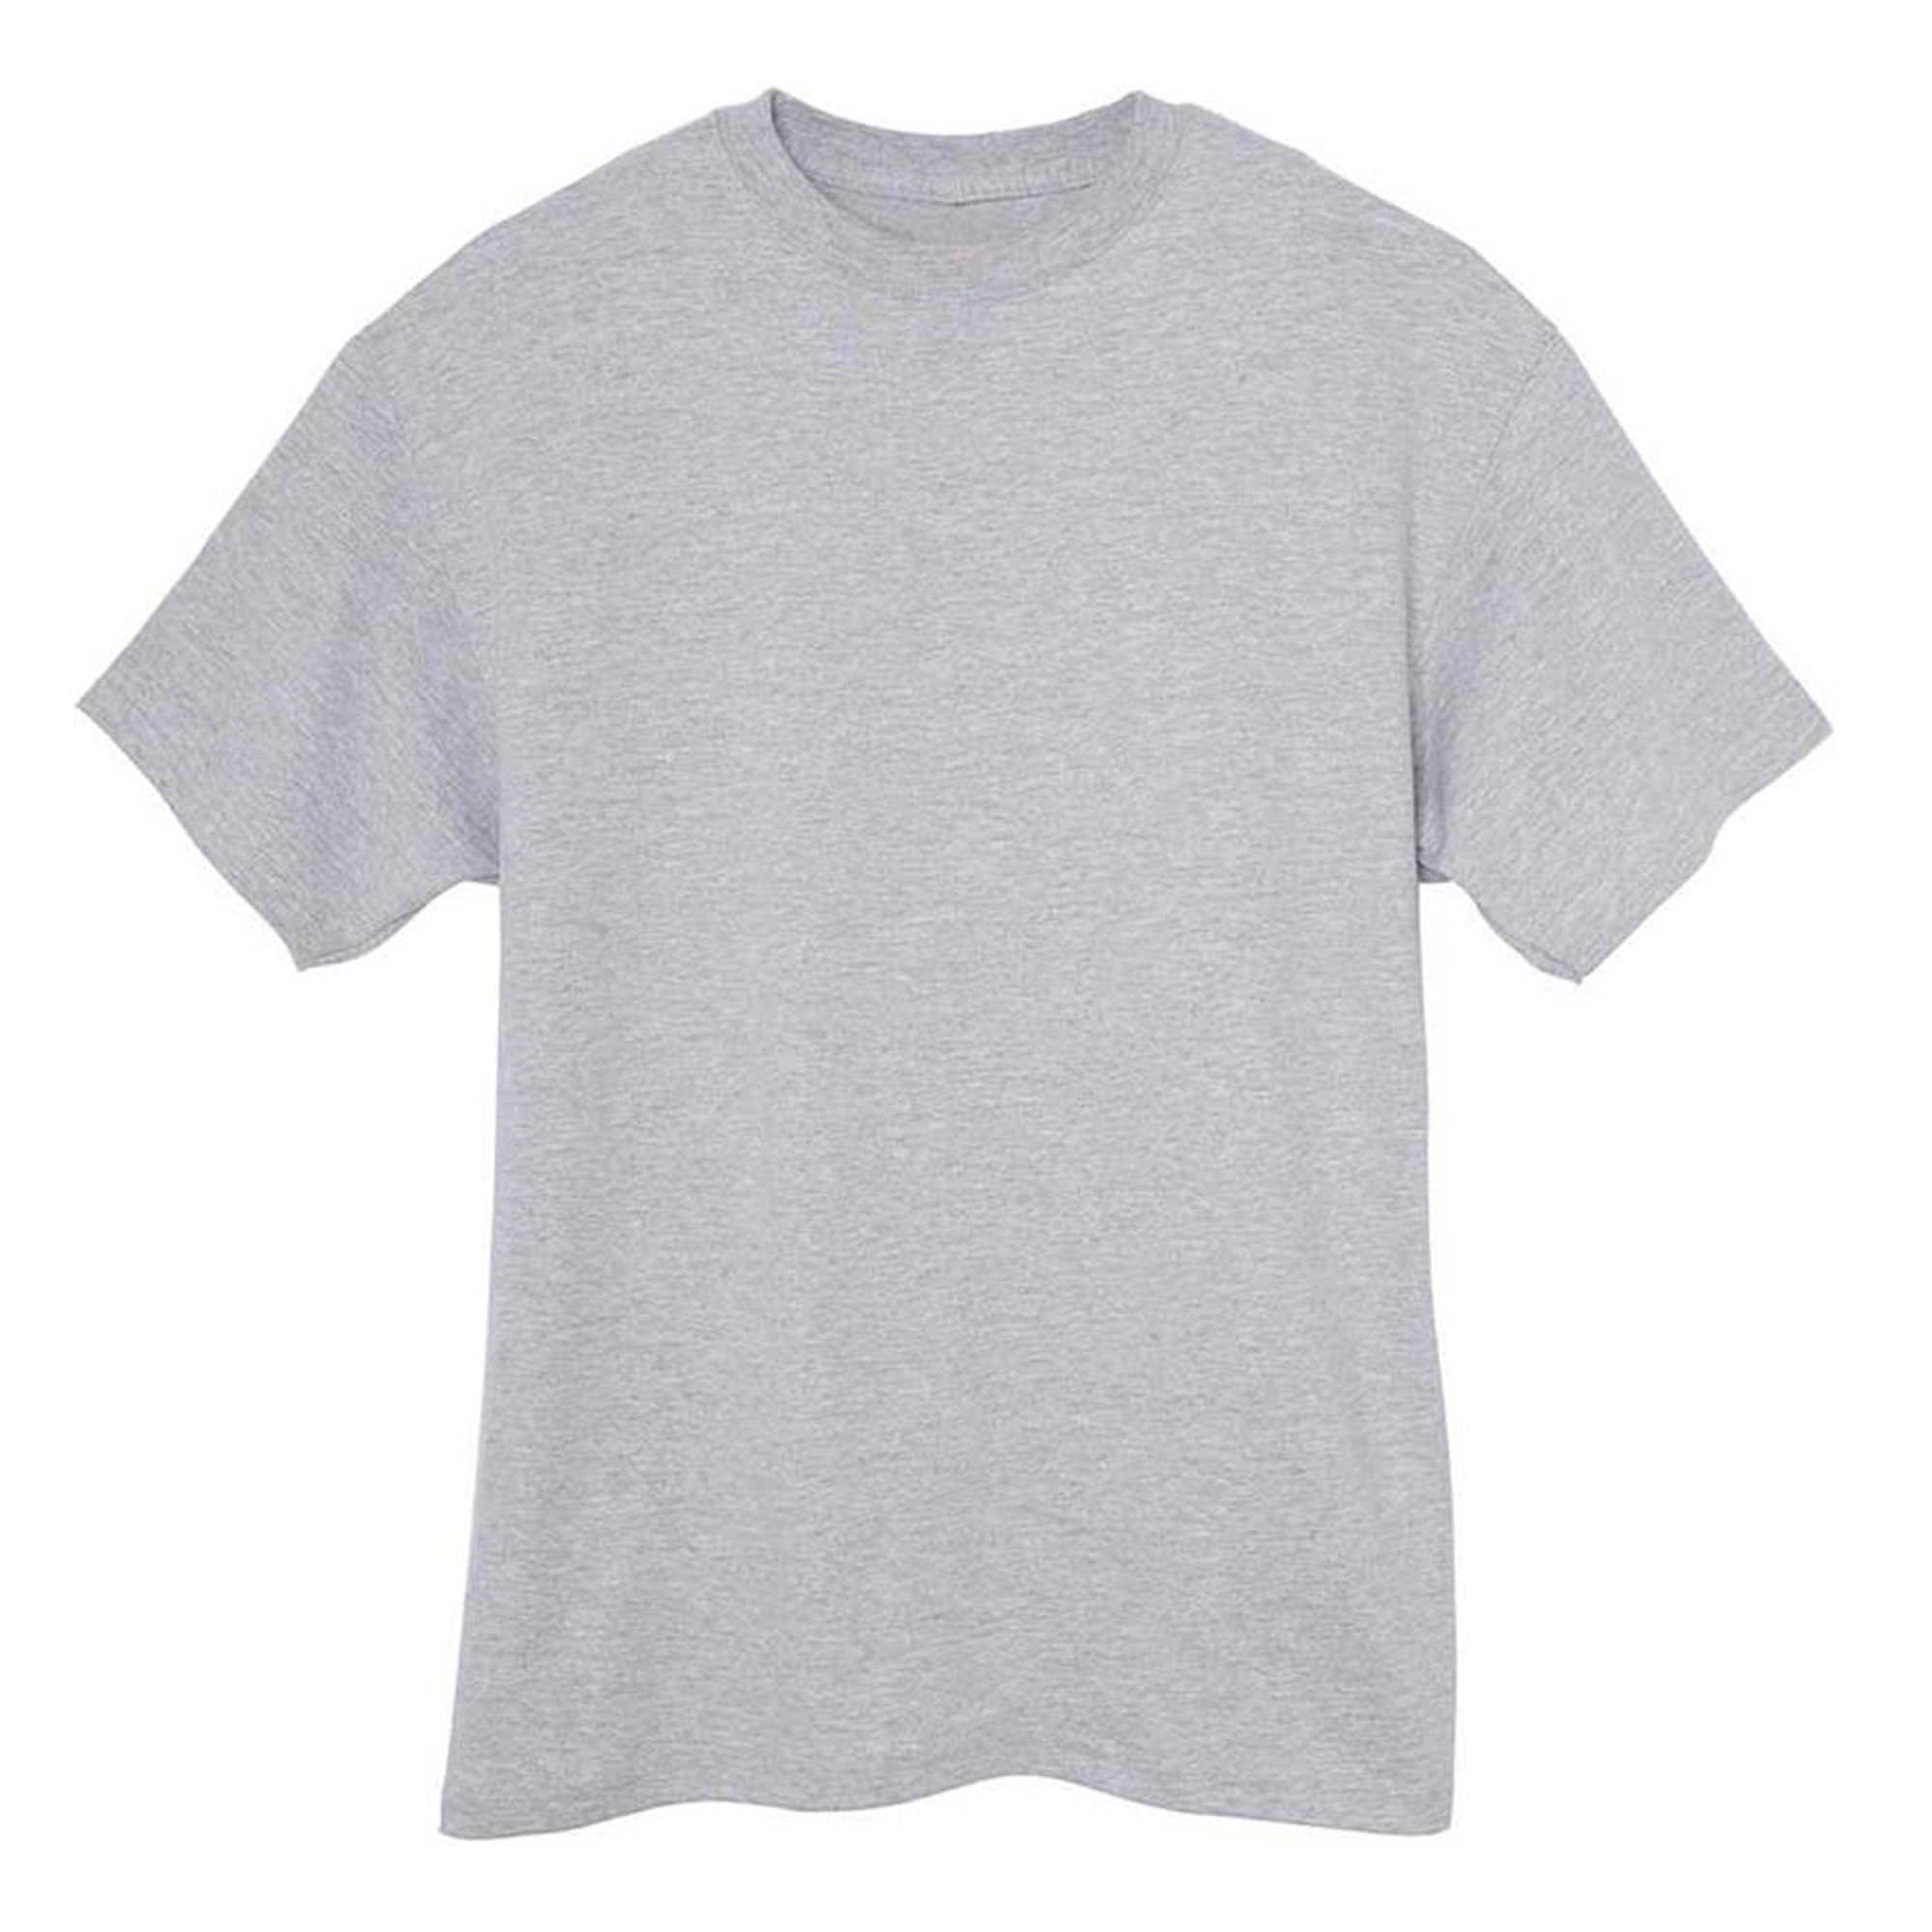 Storm Men's T-Shirt Bowling Shirt Tagless 100% Royal Blue White